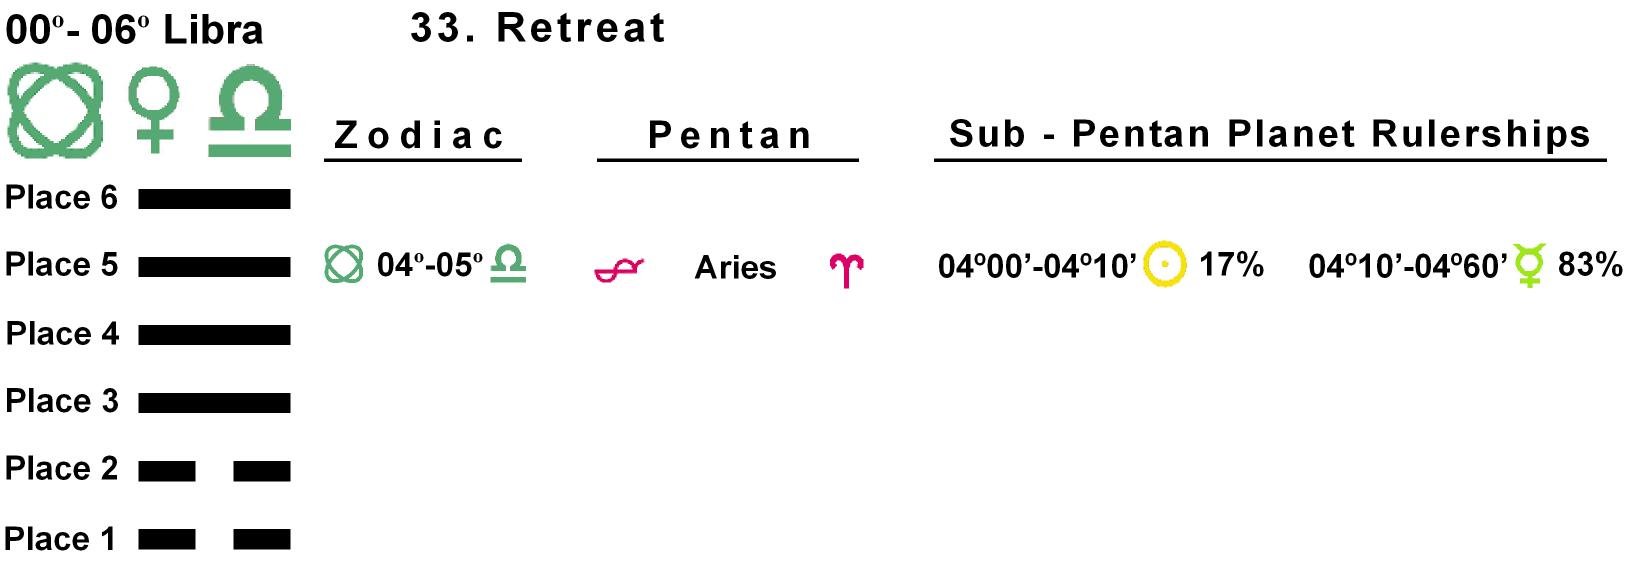 Pent-lines-07LI 04-05 Hx-33 Retreat